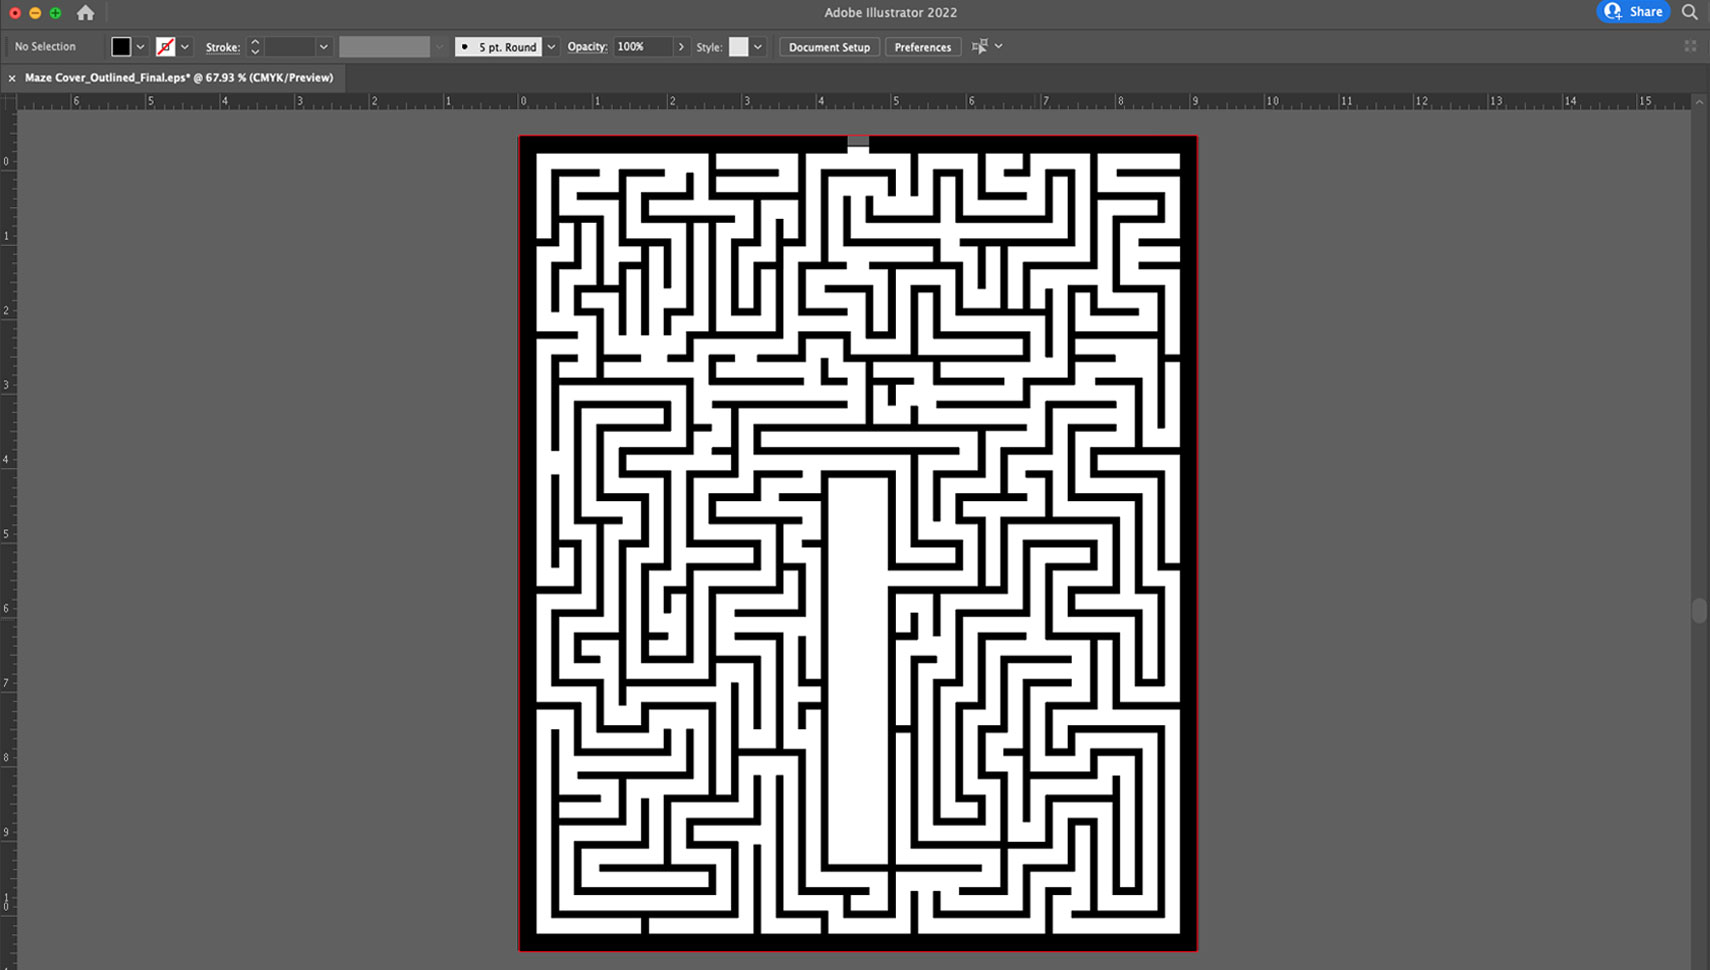 Maze design